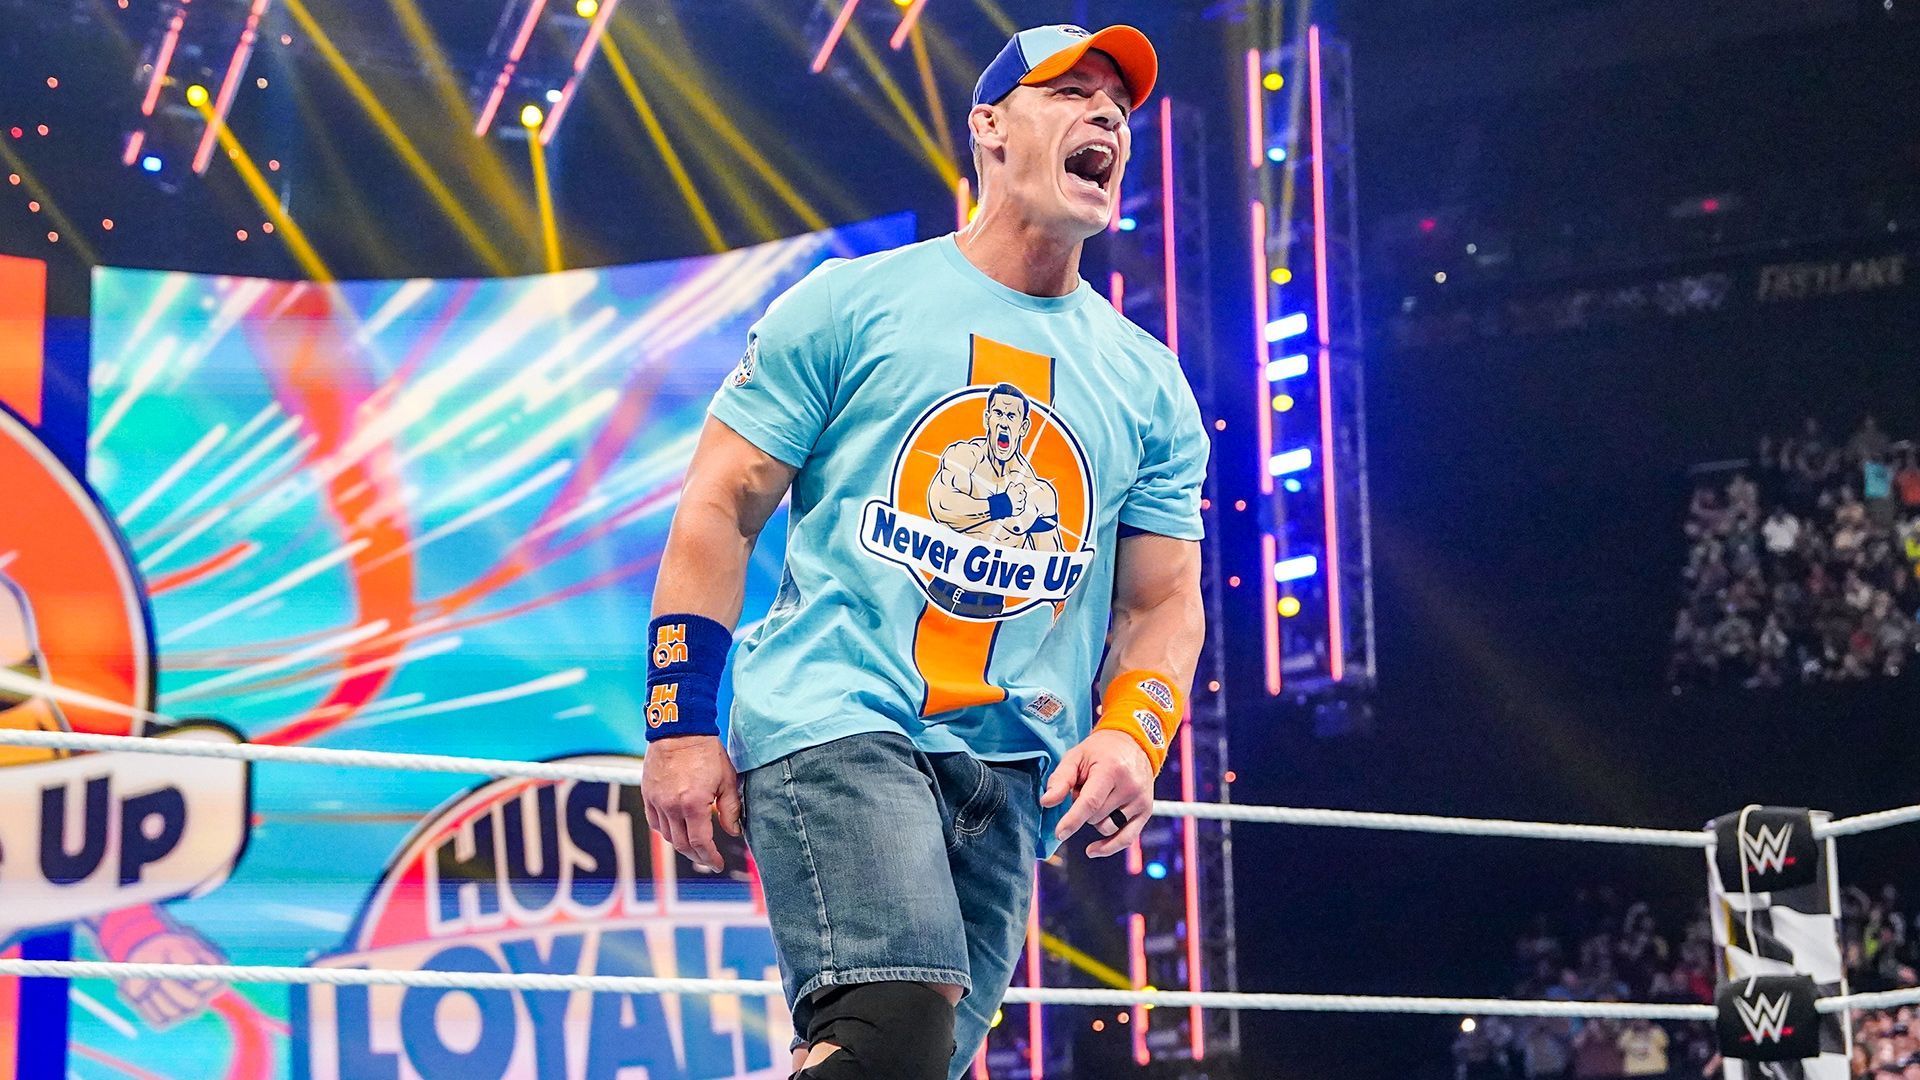 John Cena hits the ring on WWE SmackDown